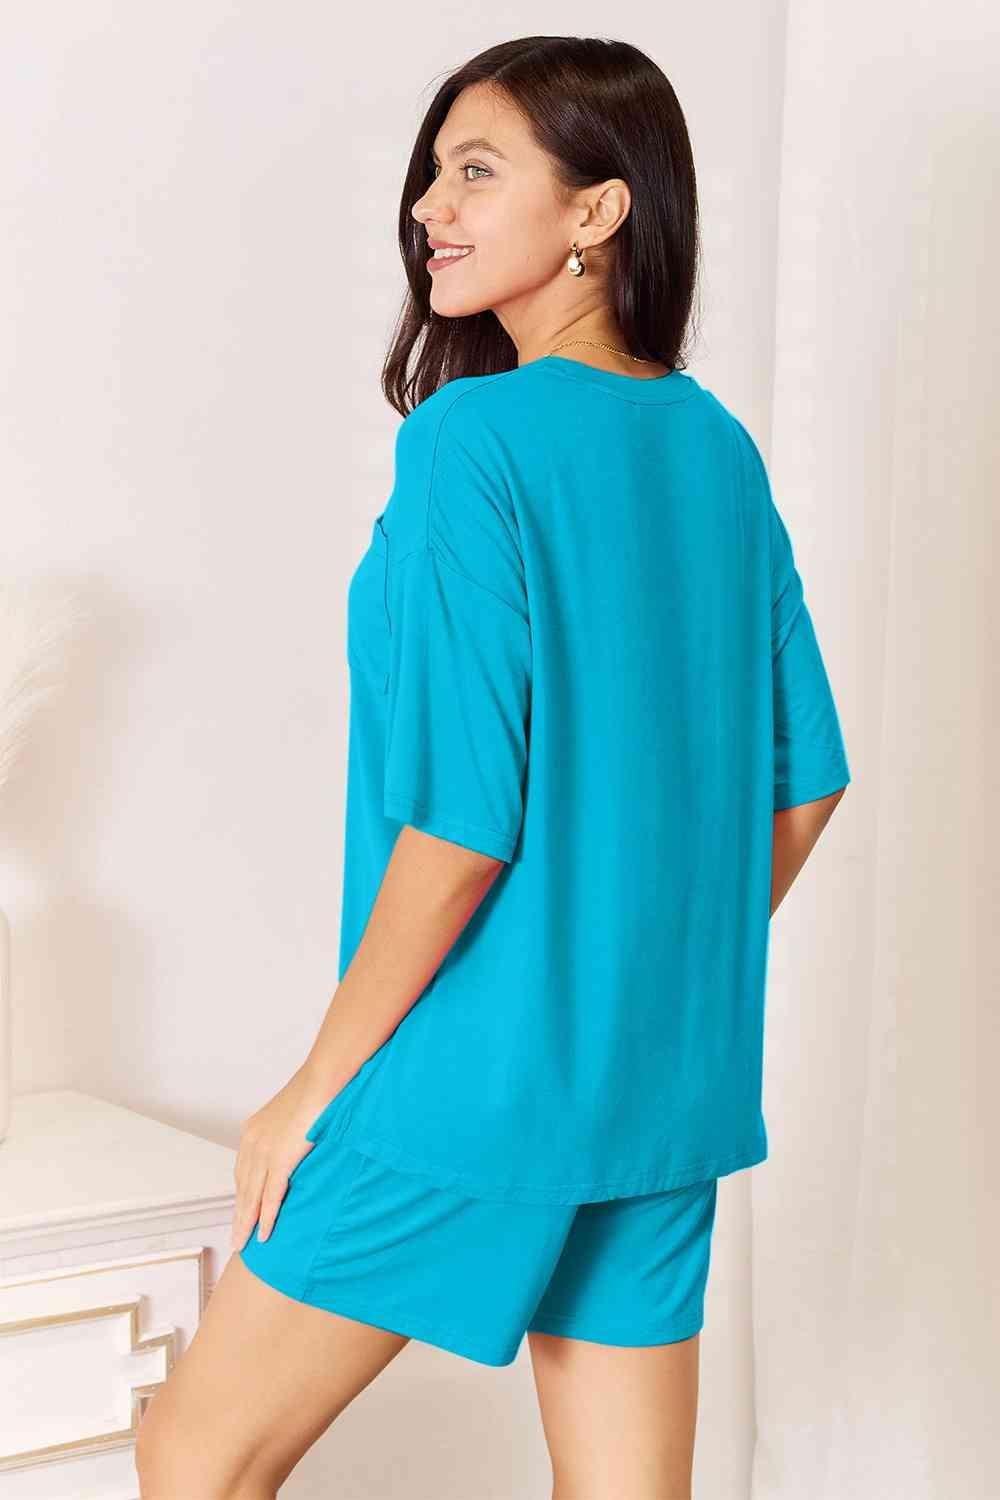 Basic Bae Full Size Soft Rayon Half Sleeve Top and Shorts Set - AMIClubwear